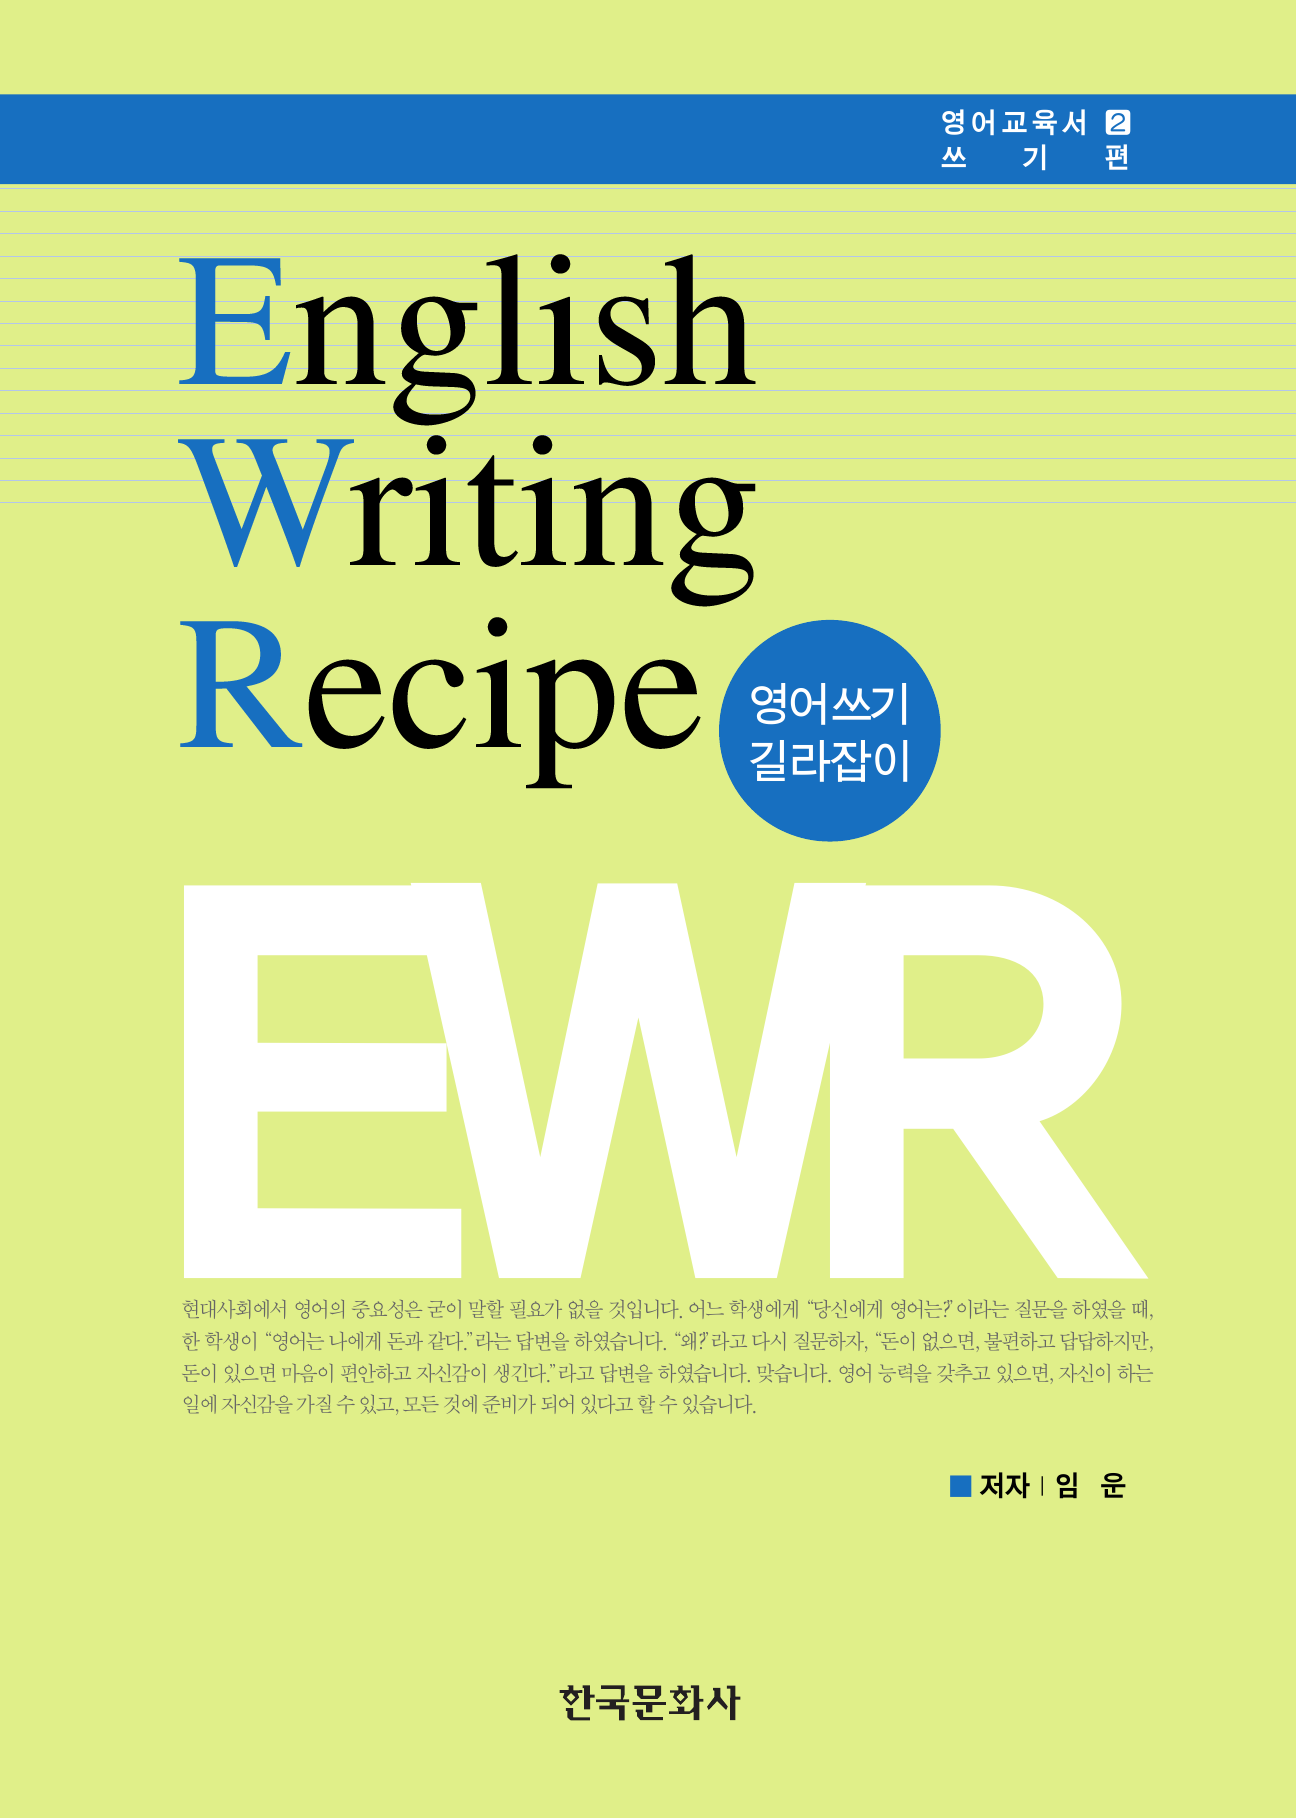 ENGLISH WRITING RECIPE(영어쓰기 길라잡이)